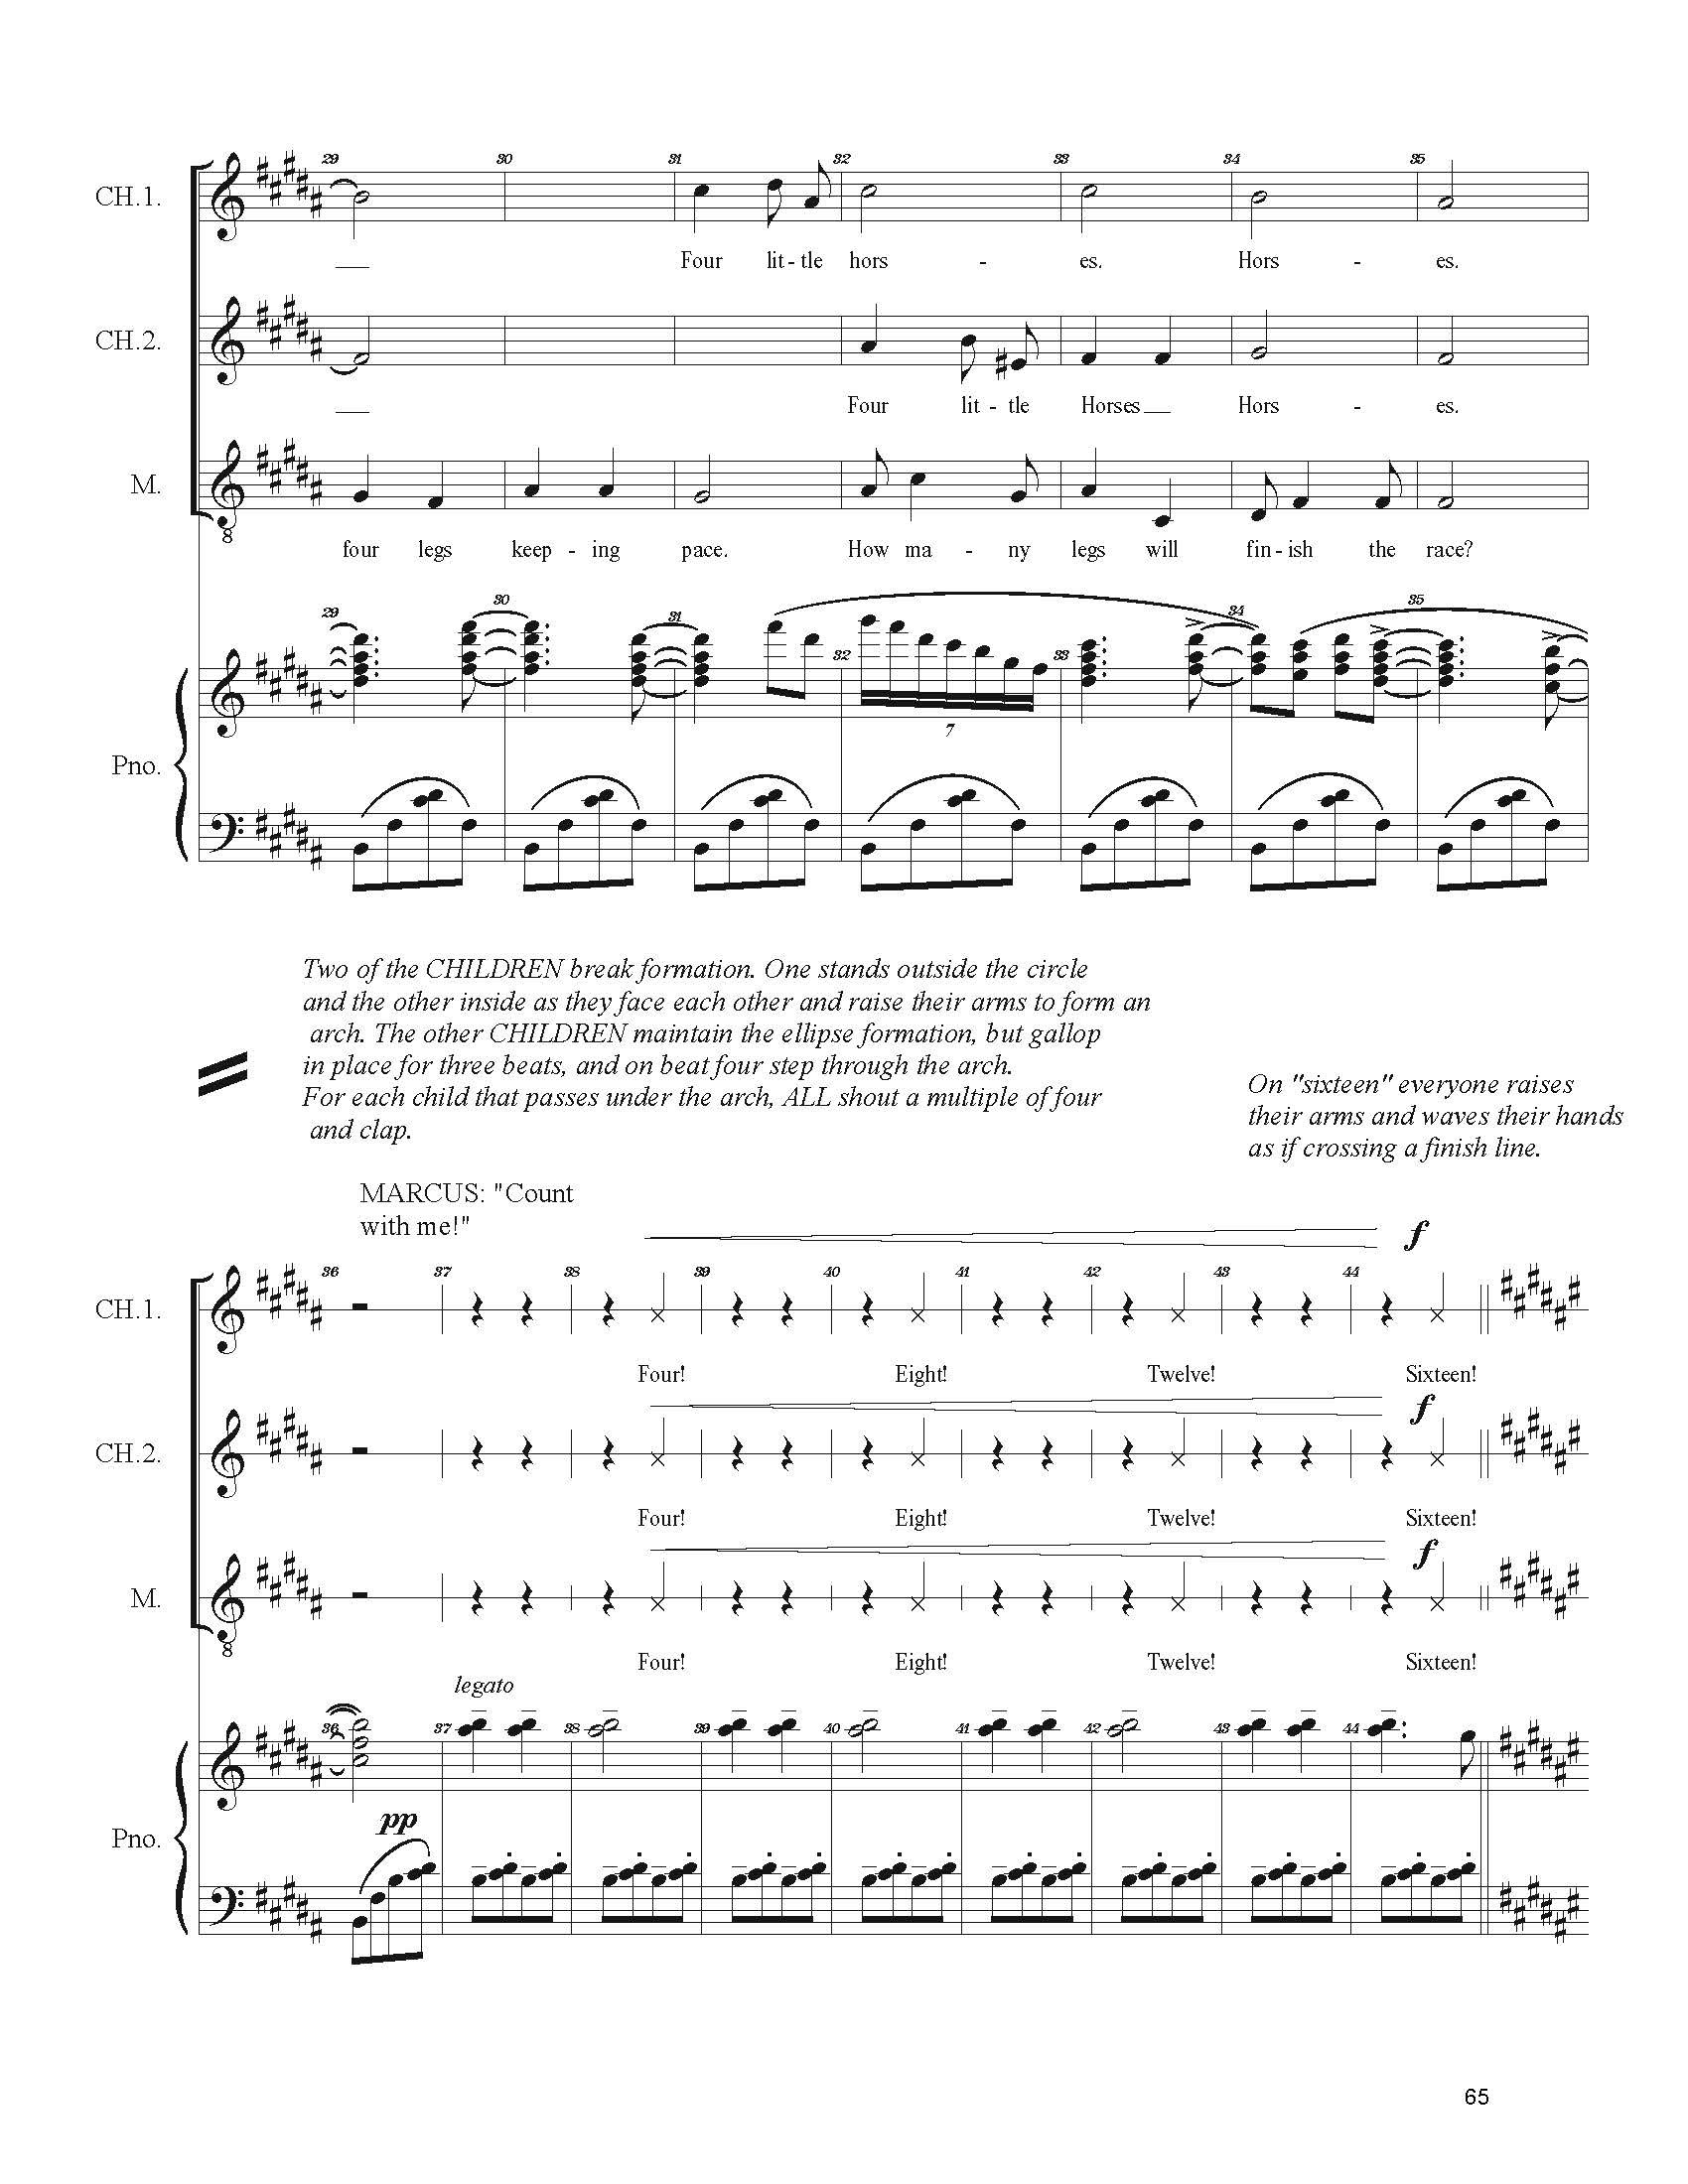 FULL PIANO VOCAL SCORE DRAFT 1 - Score_Page_065.jpg